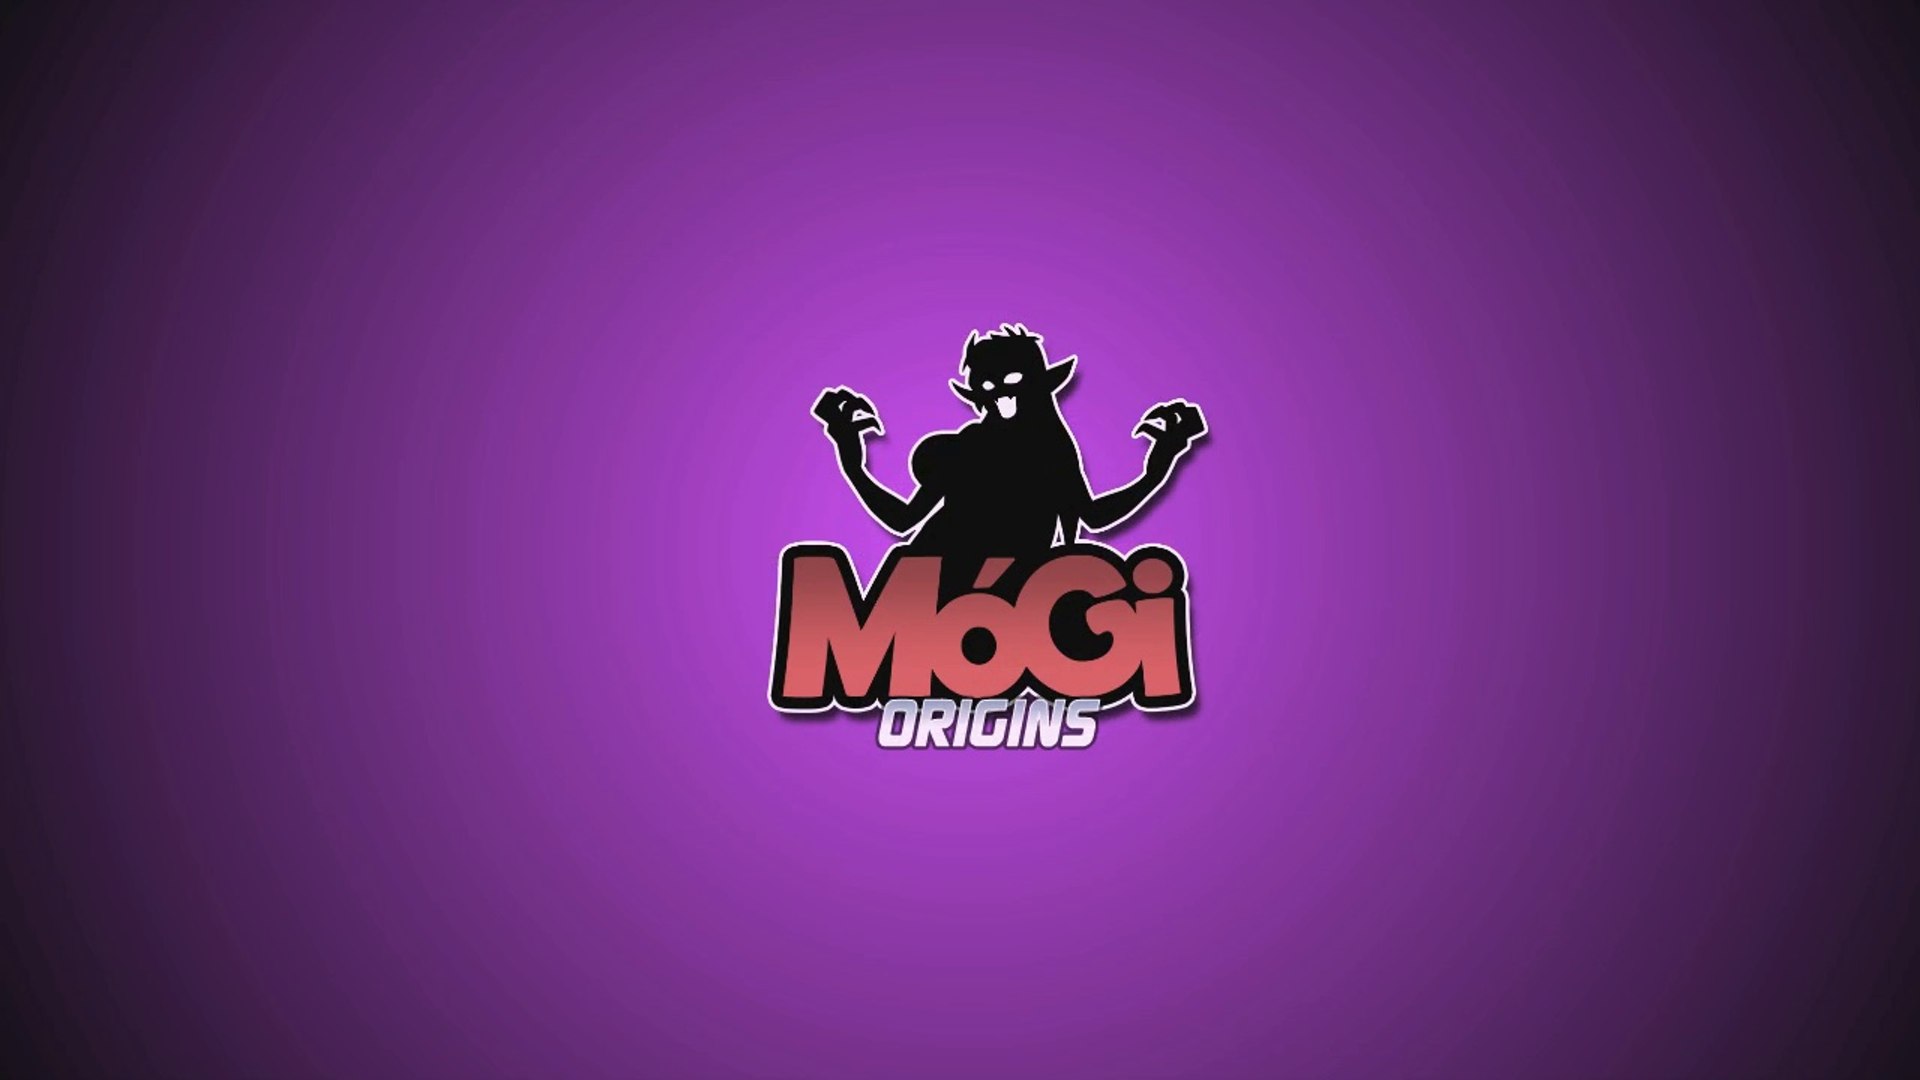 Mogi origins